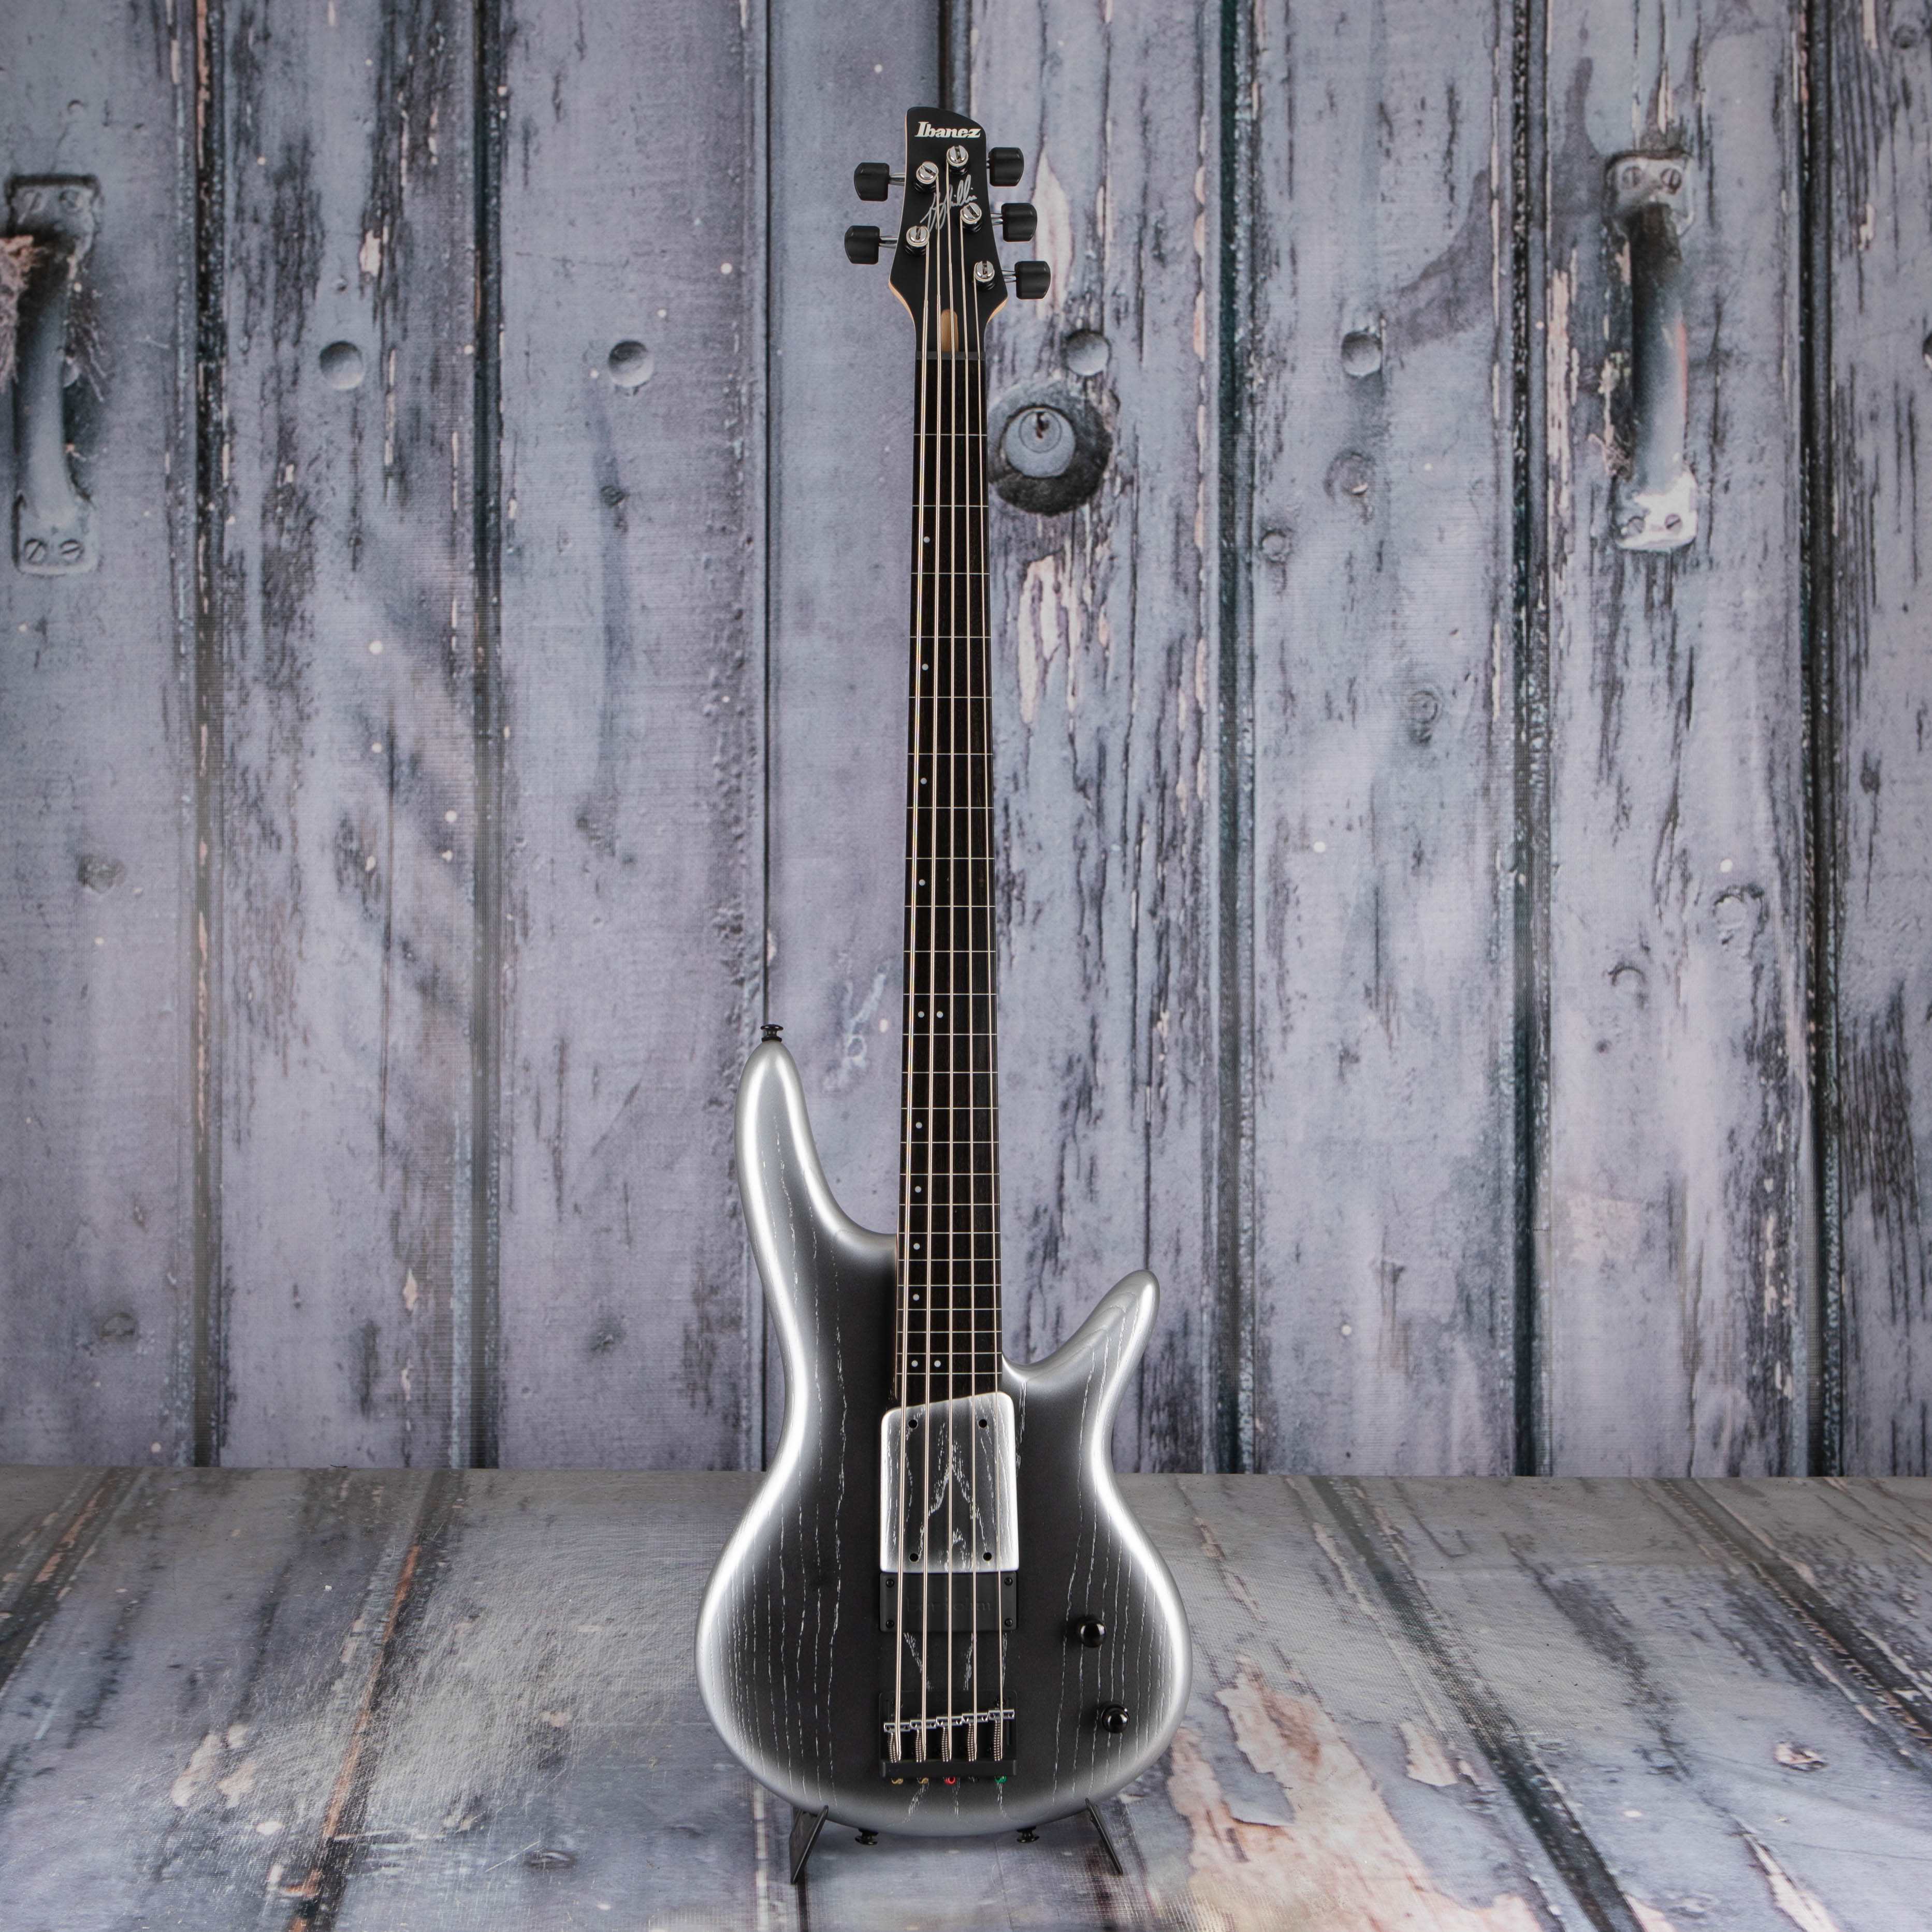 Ibanez Premium Gary Willis Signature Fretless 5-String Electric Bass Guitar, Silver Wave Burst Flat, front